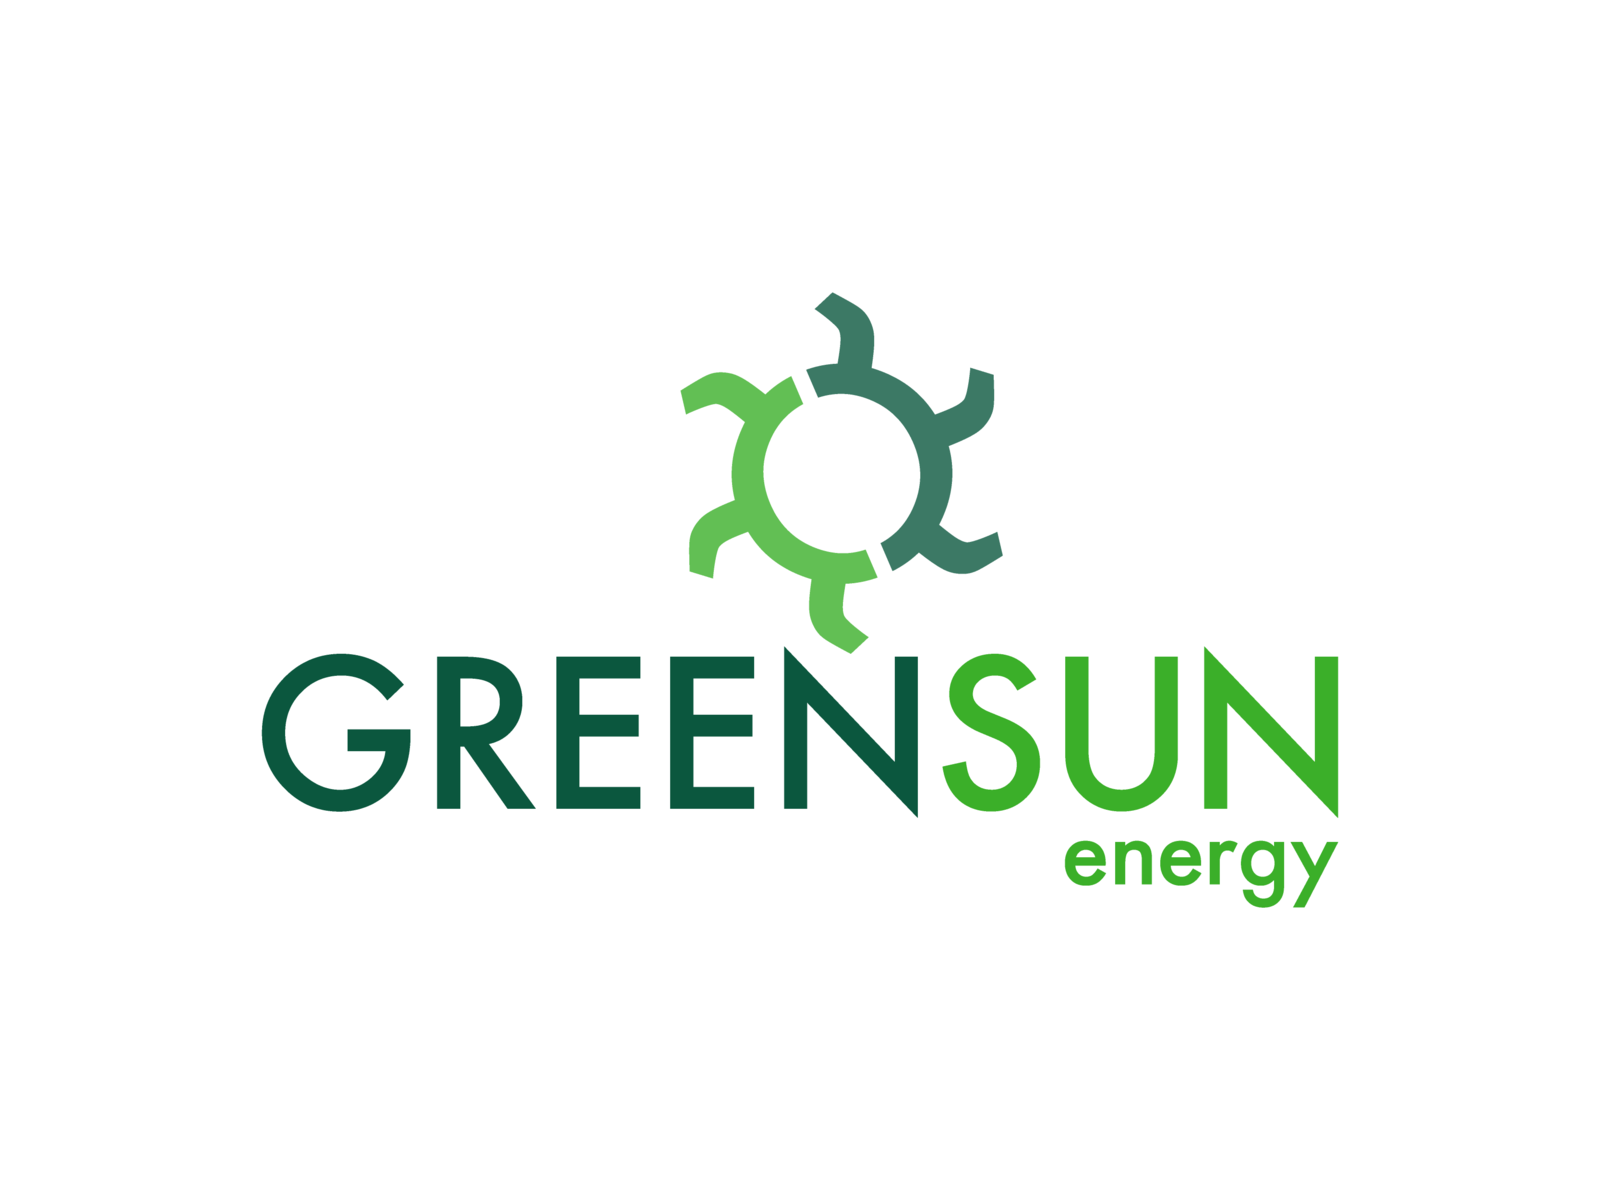 Greensun Energy Logo by Ryan Richard on Dribbble